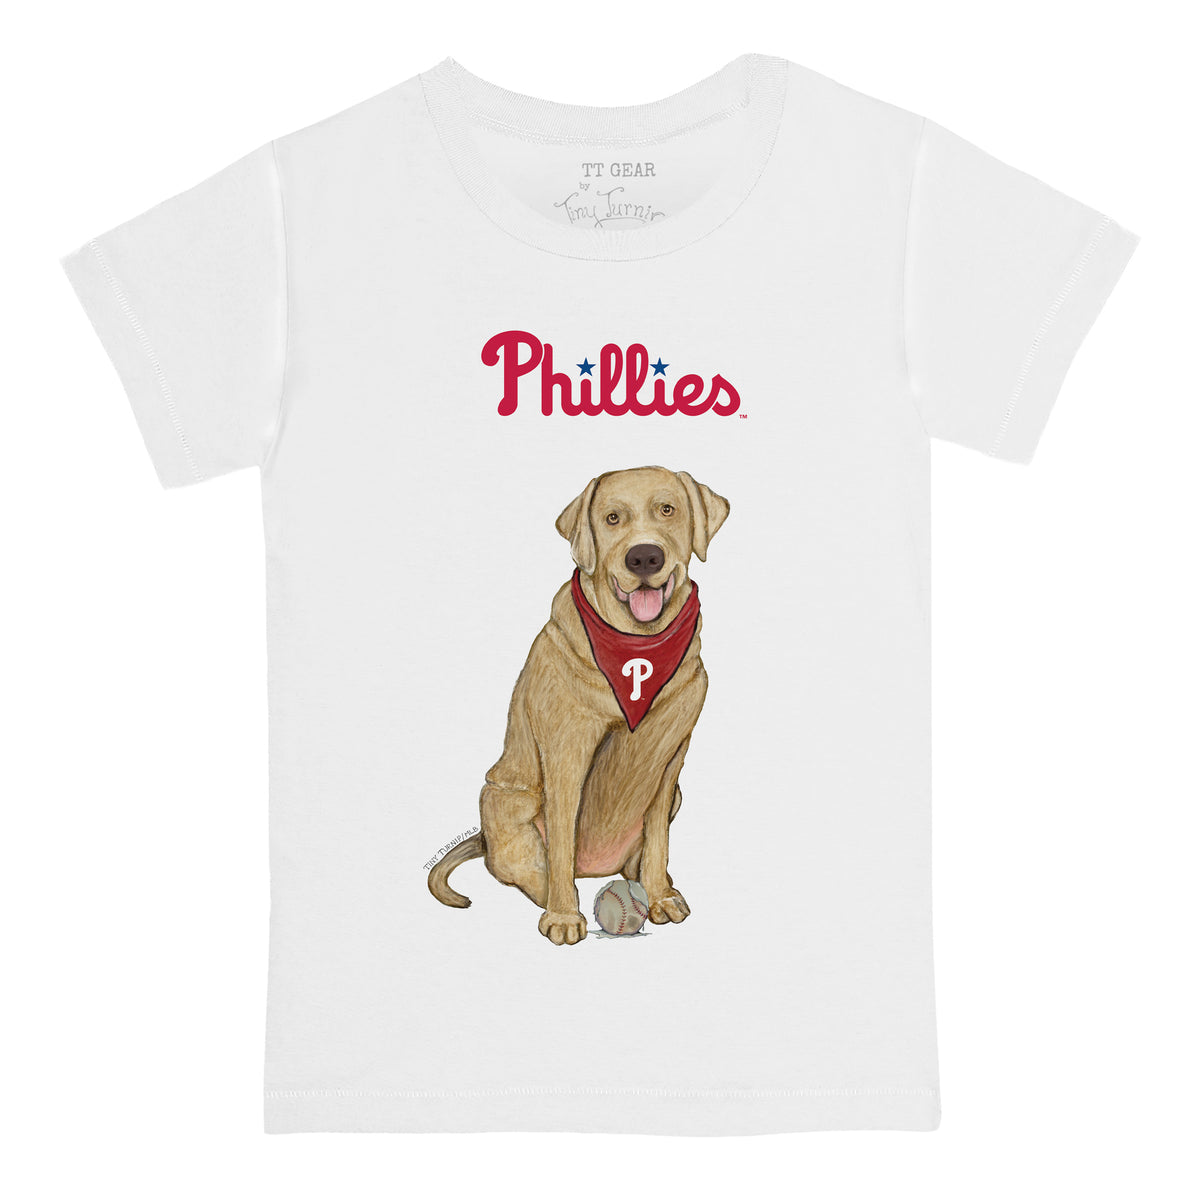 Philadelphia Phillies Yellow Labrador Retriever Tee Shirt